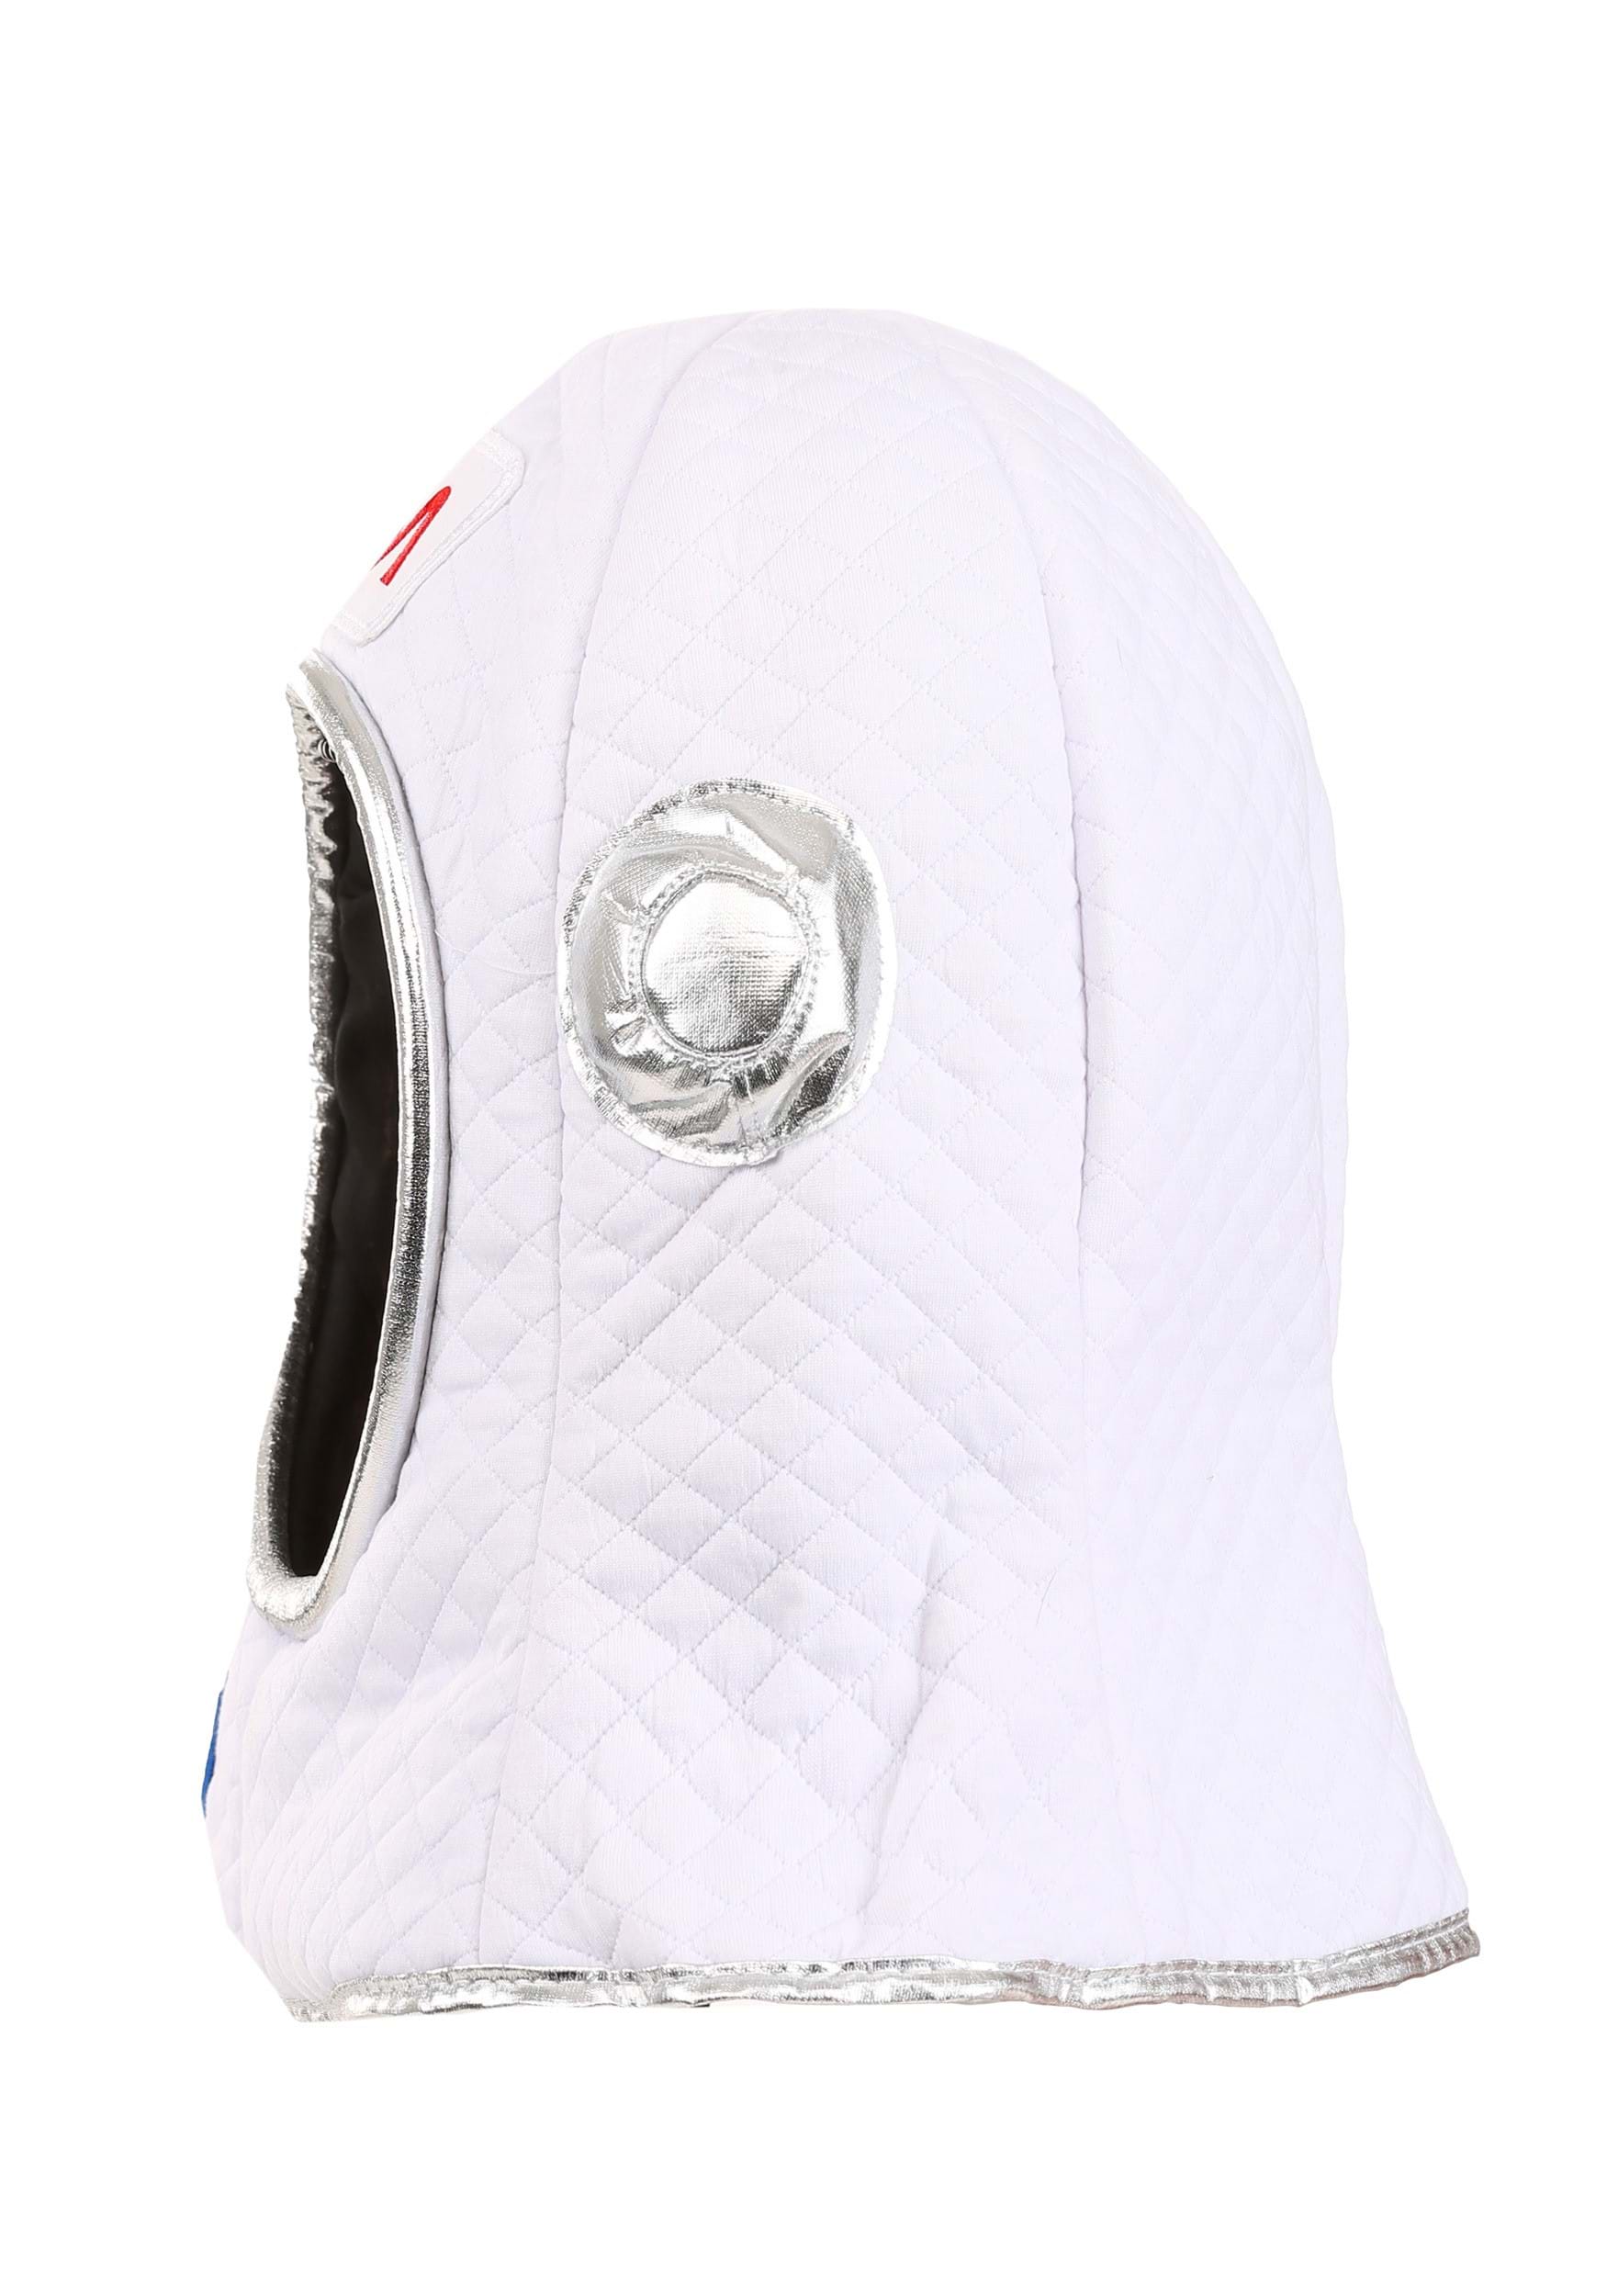 Astronaut Space Fancy Dress Costume Plush Helmet